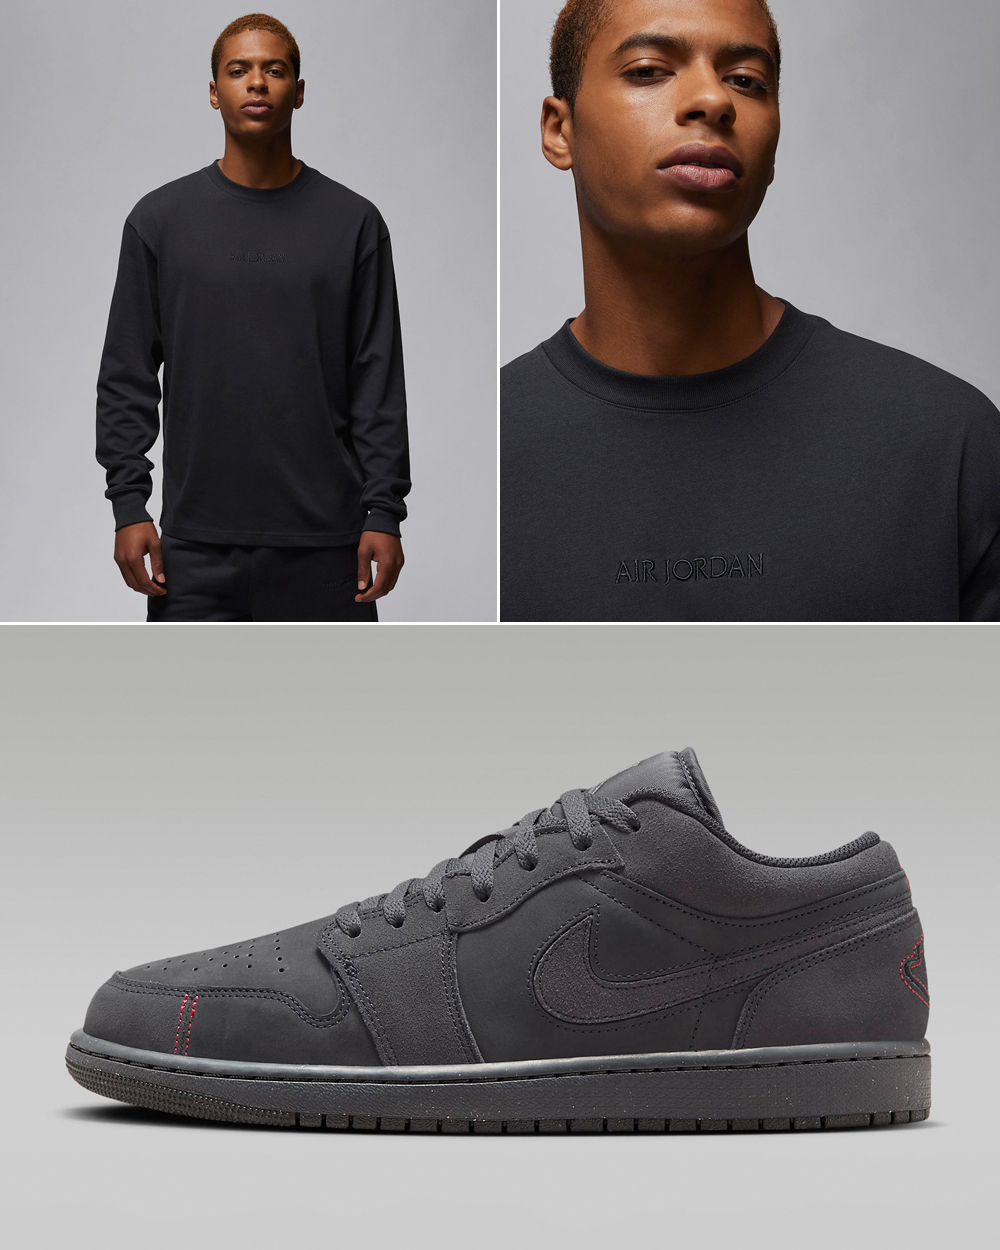 Air-Jordan-1-Low-Craft-Dark-Smoke-Grey-Long-Sleeve-T-Shirt-Matching-Outfit